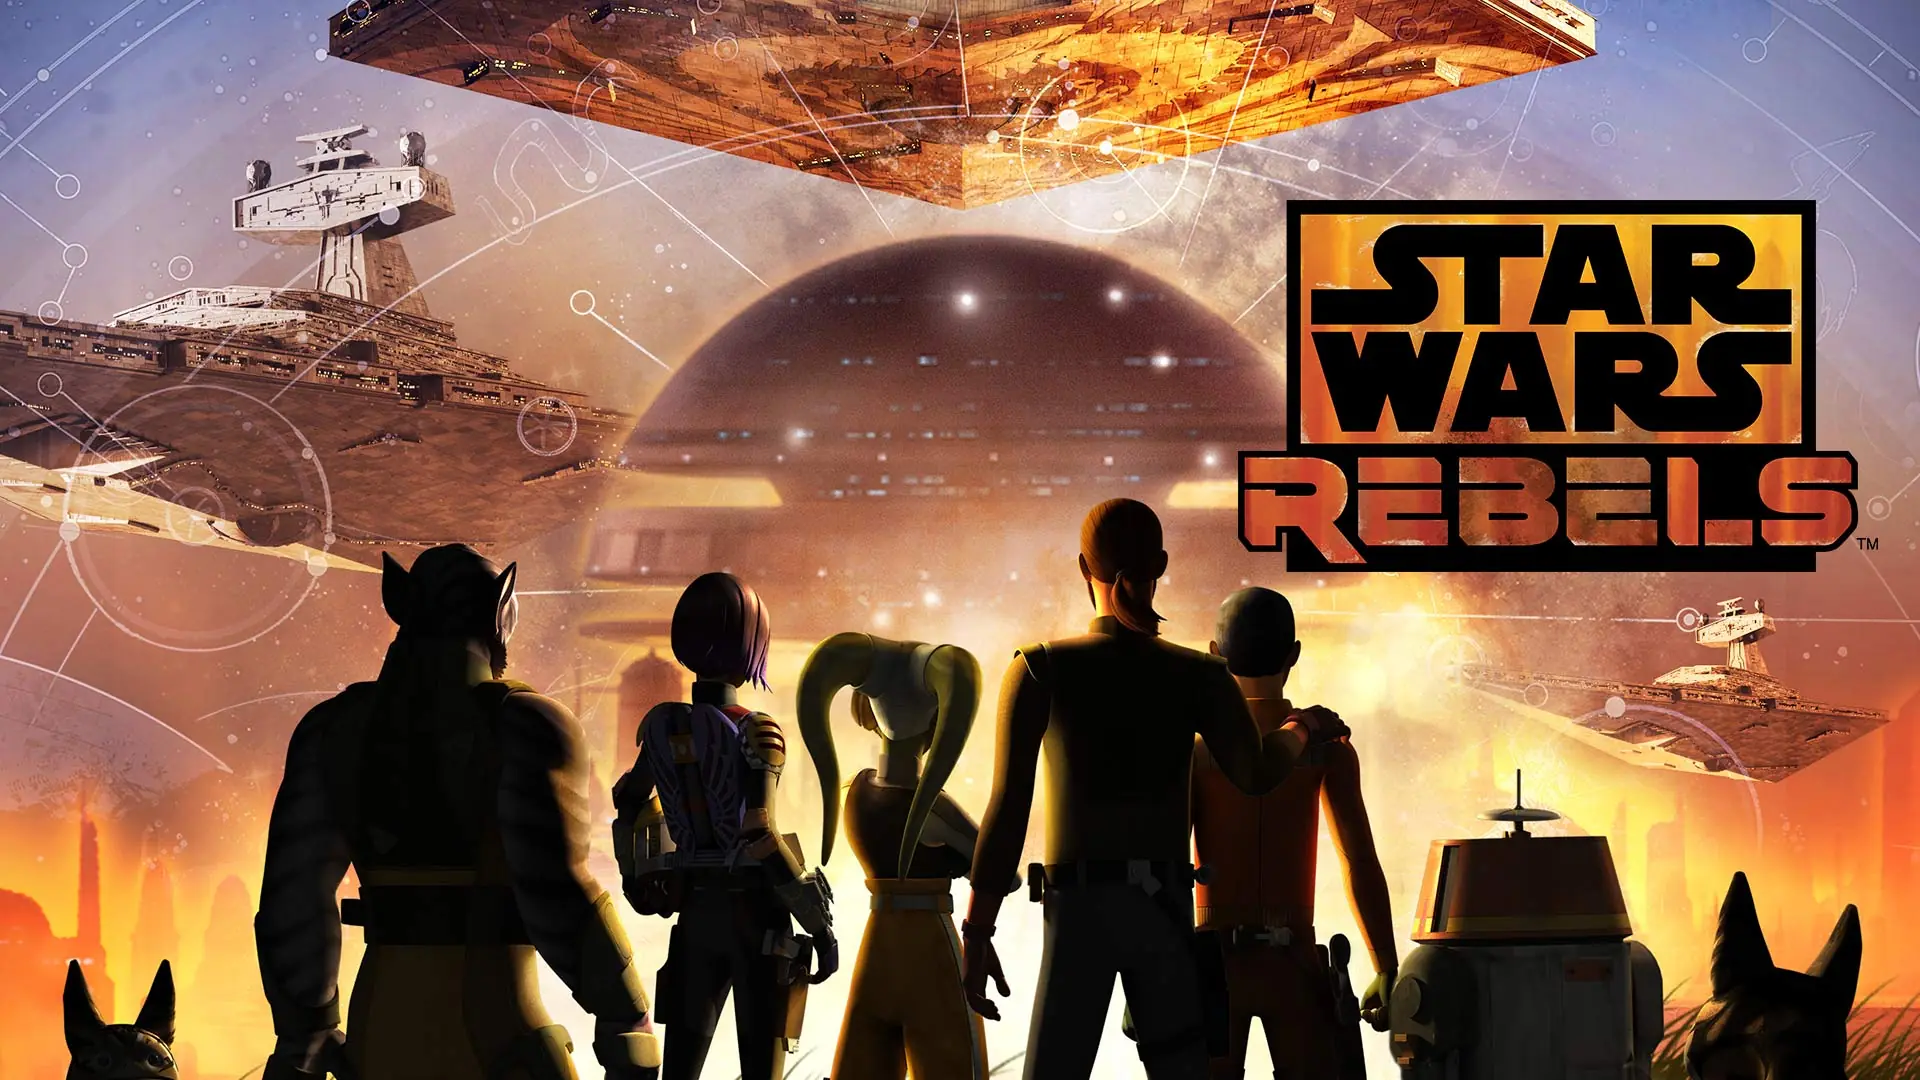 Star Wars Rebels Season 4 Multi Audio Hindi Eng Tamil Telugu 720p 1080p HD WEB DL ESub Rare Toons India